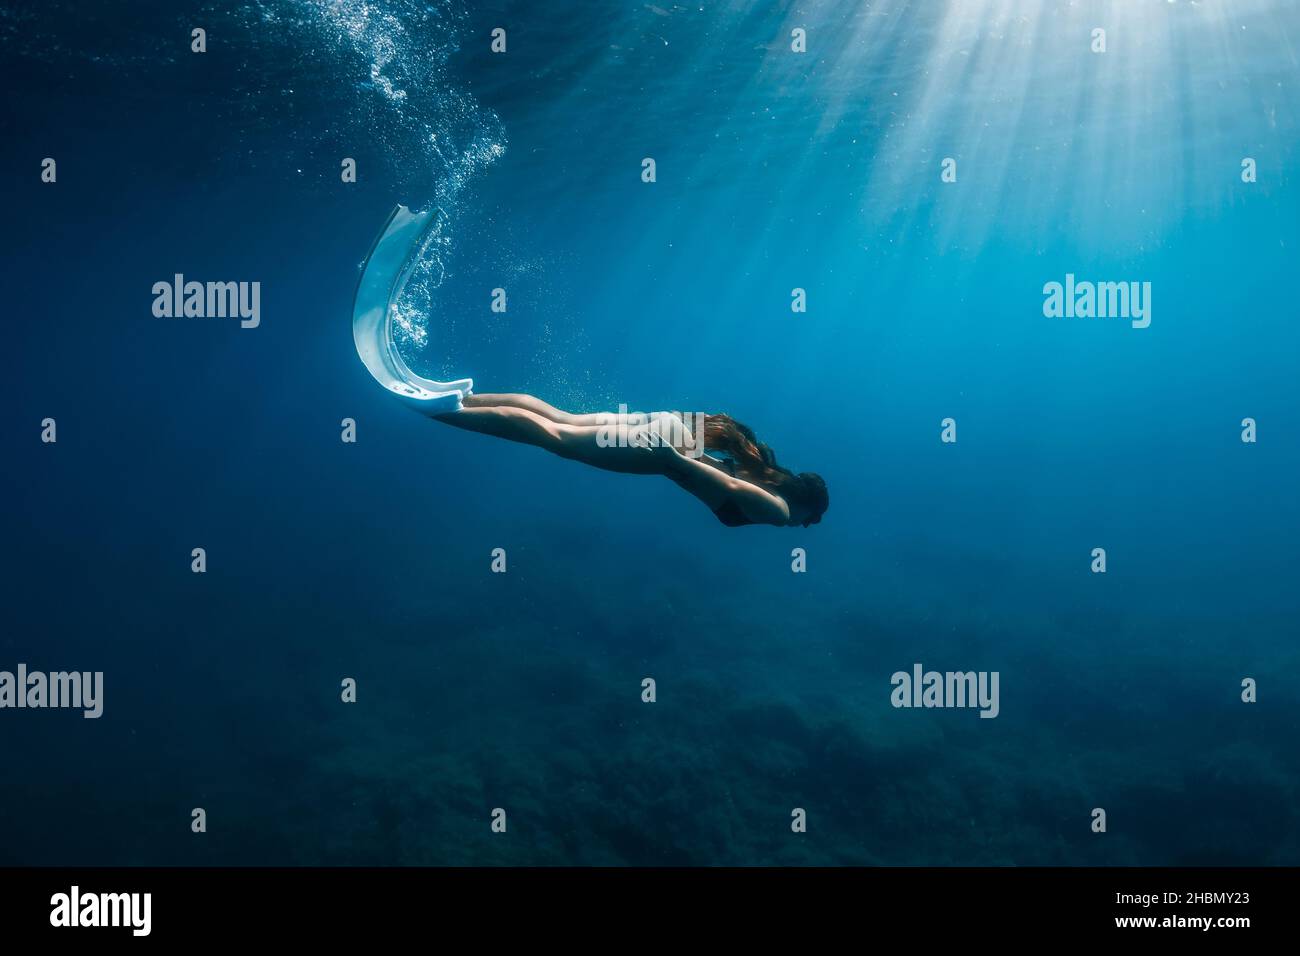 Freediver woman in bikini with fins dive underwater in deep blue ocean. Stock Photo